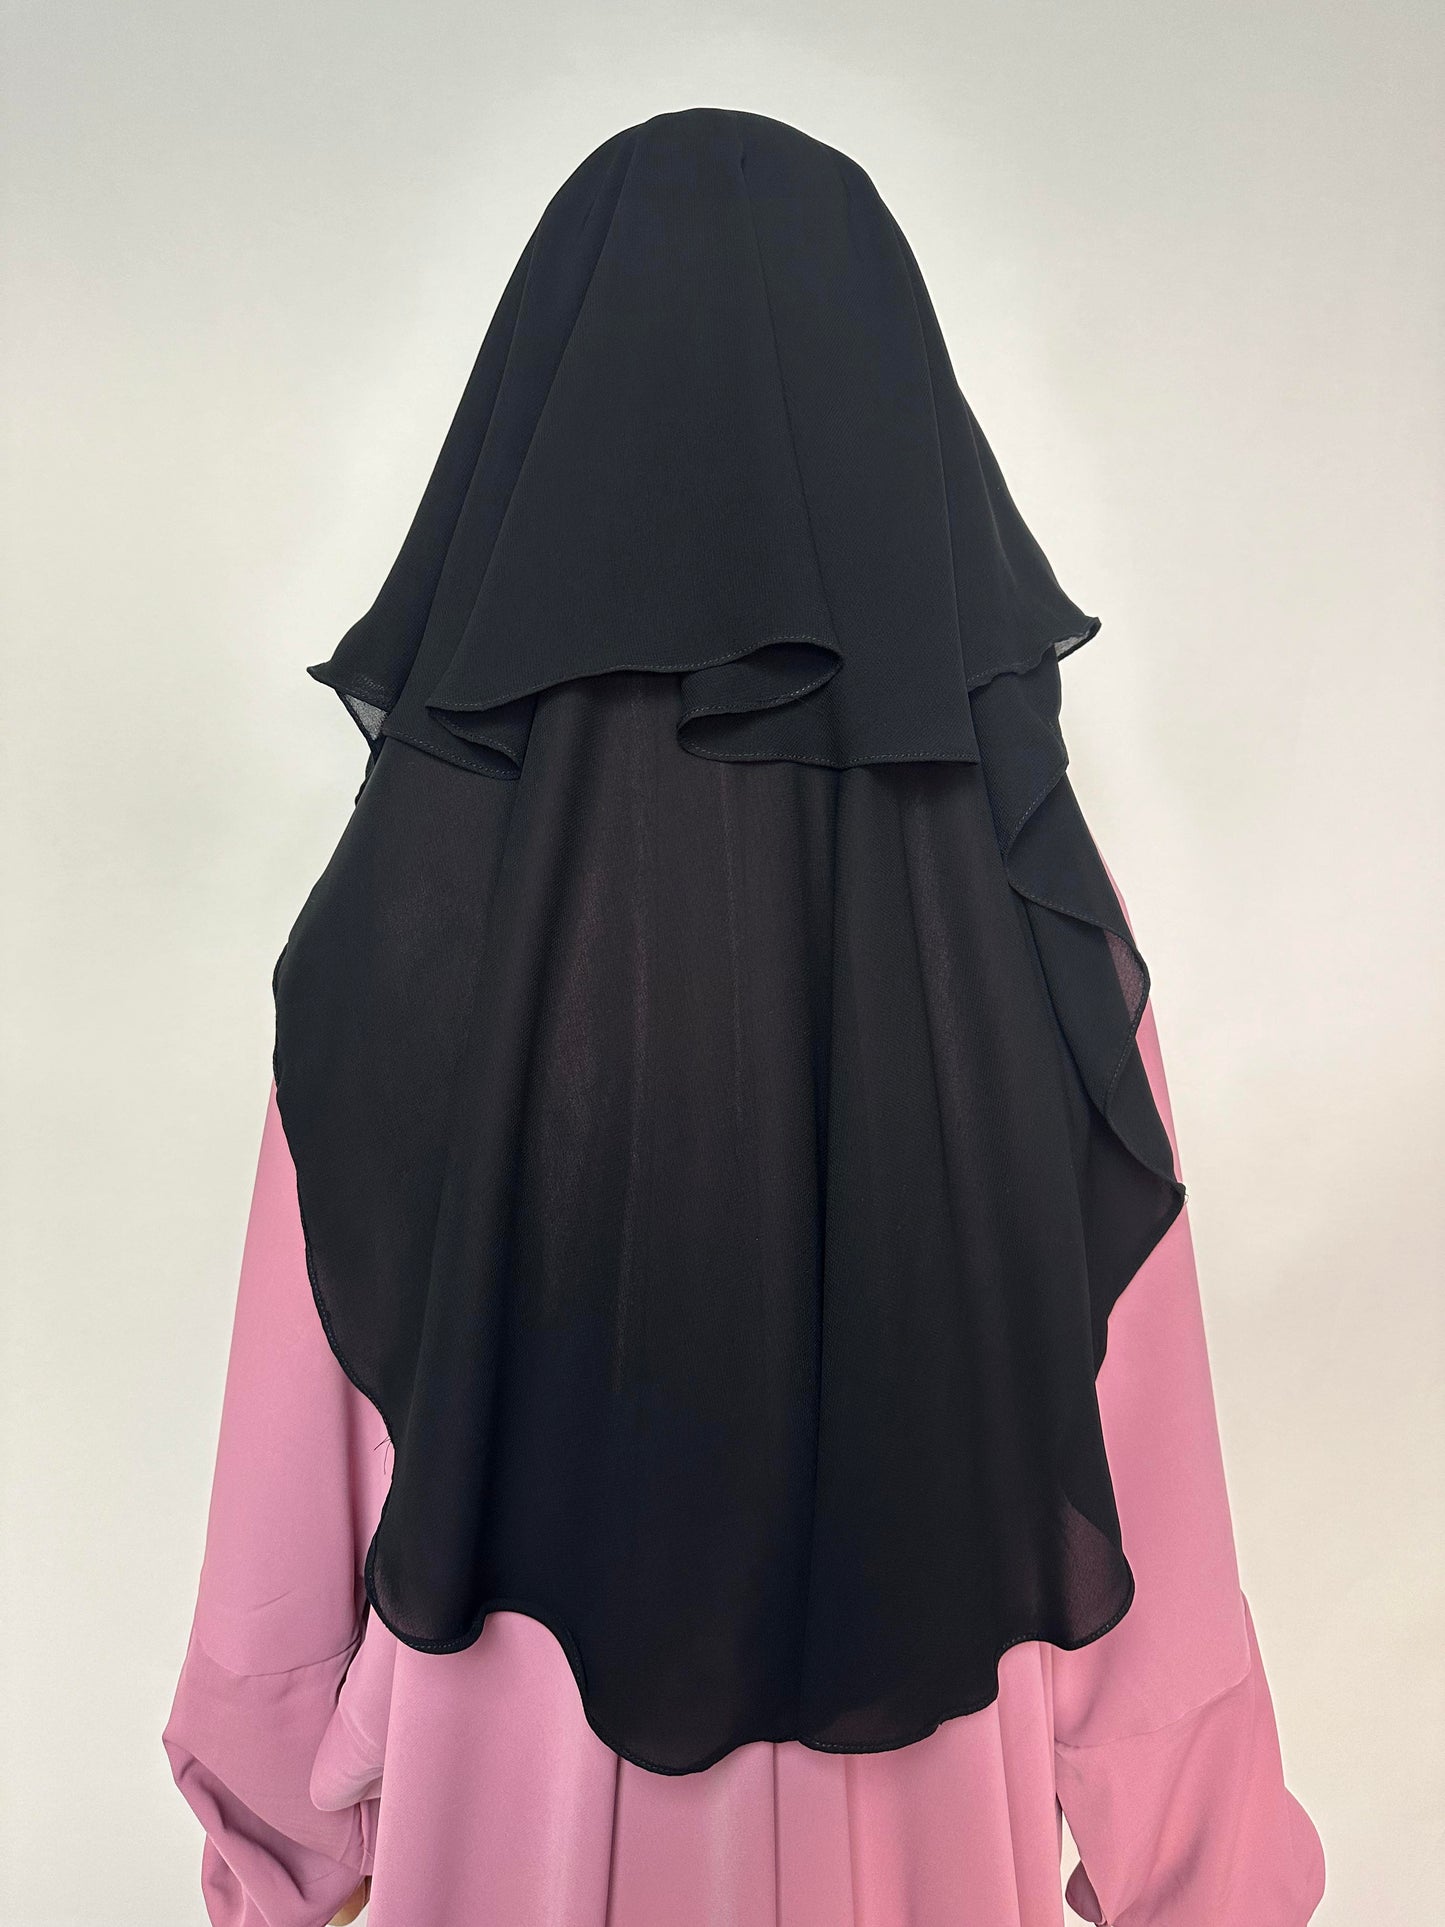 Bedoon Essm Three Layer Niqab - Black